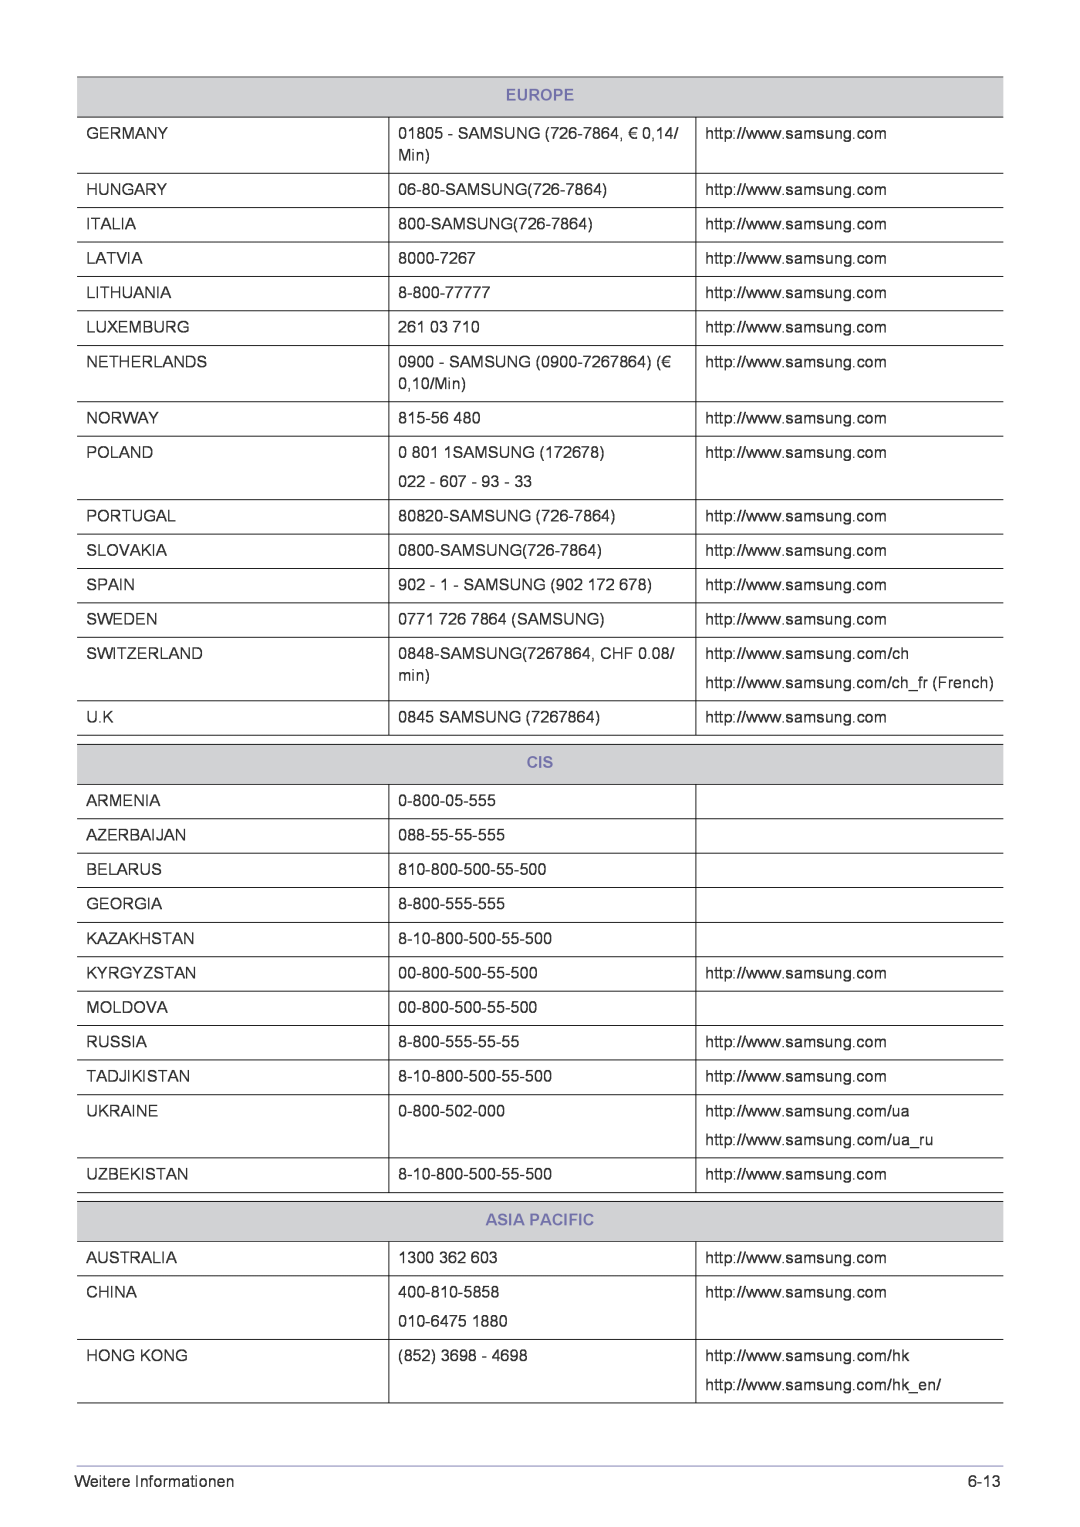 Samsung LS22X3HKFH/XF, LS24X3HKFE/EN, LS24X3HKFN/EN, LS22X3HKFN/EN, LS23X3HKFN/EN, LS22X3HKFE/EN manual Europe, Asia Pacific 